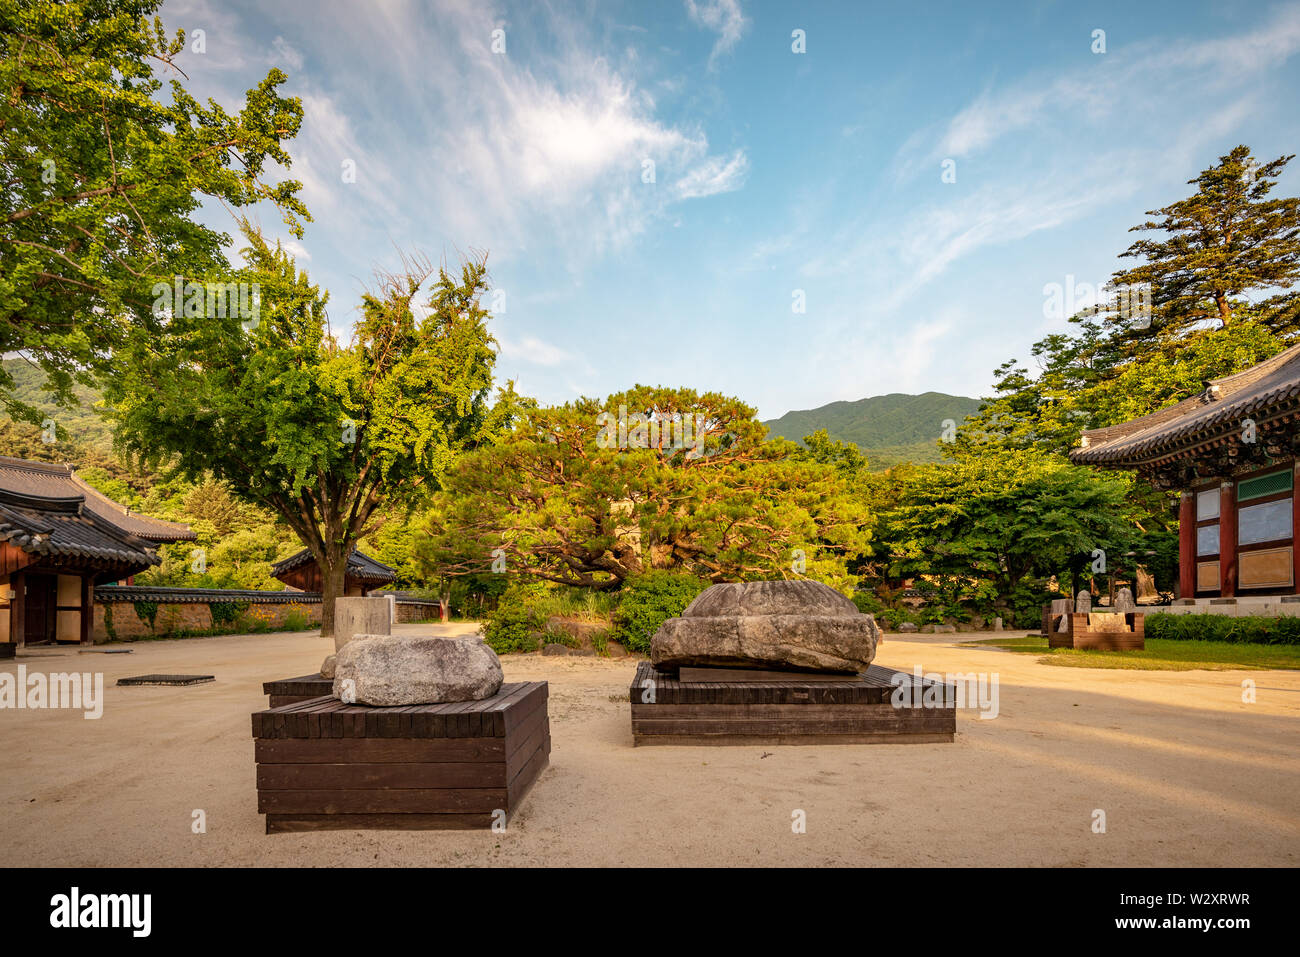 Pine tree in a courtyard at Jijiksa Monastery, taken early morning, Gimcheon, South Korea Stock Photo